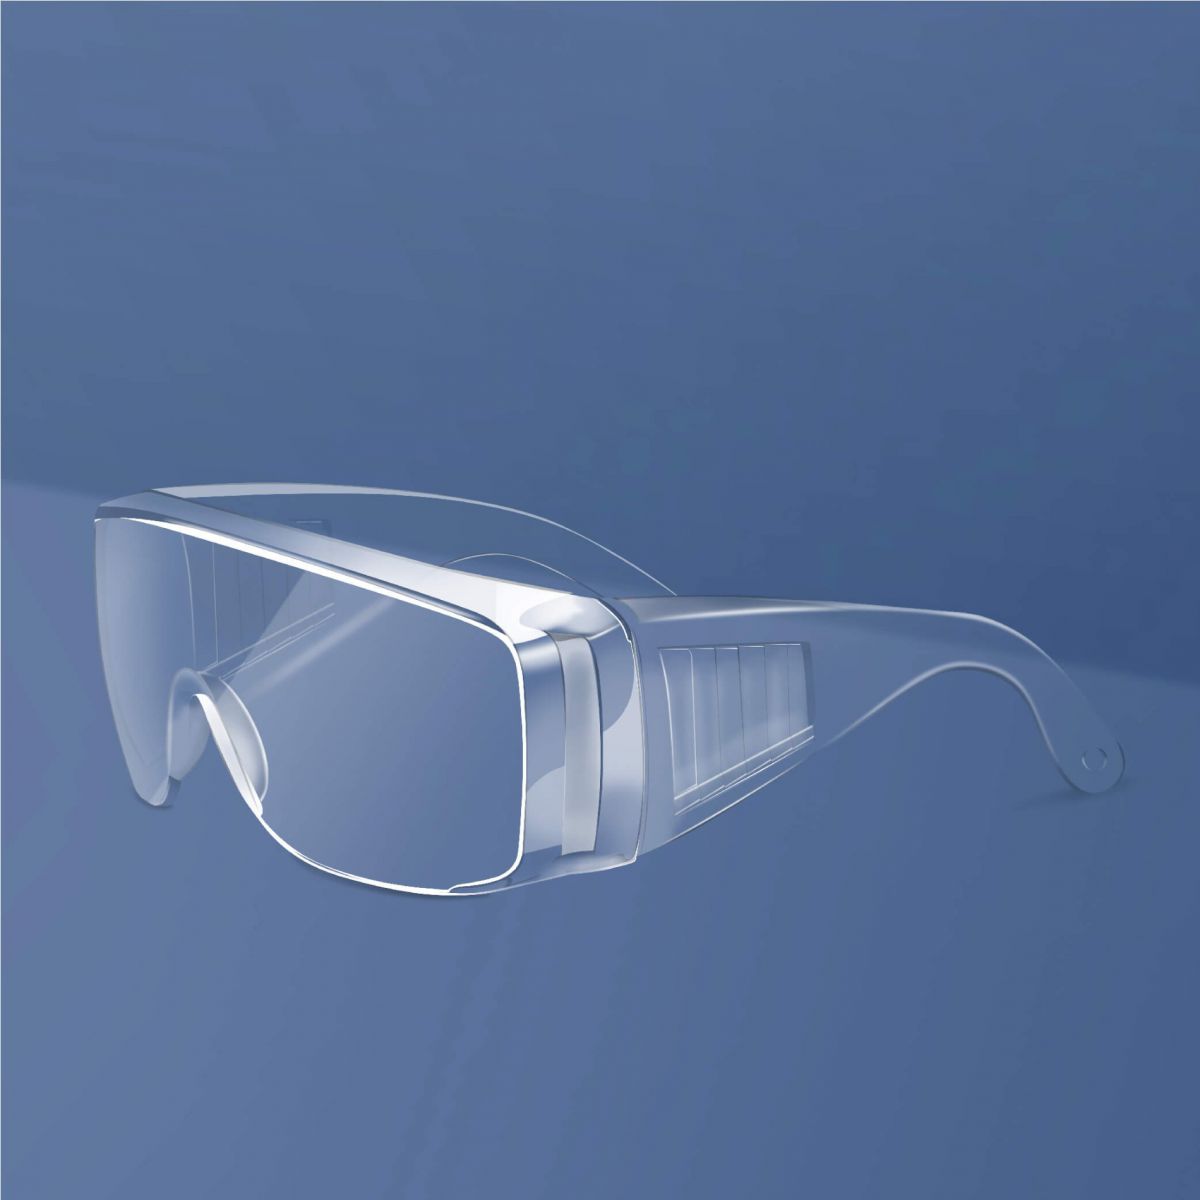 Safety Glasses Anti Virus Anti Saliva Clear PC Frame Anti Impact  Ansi z87.1 Medical Safety Goggles